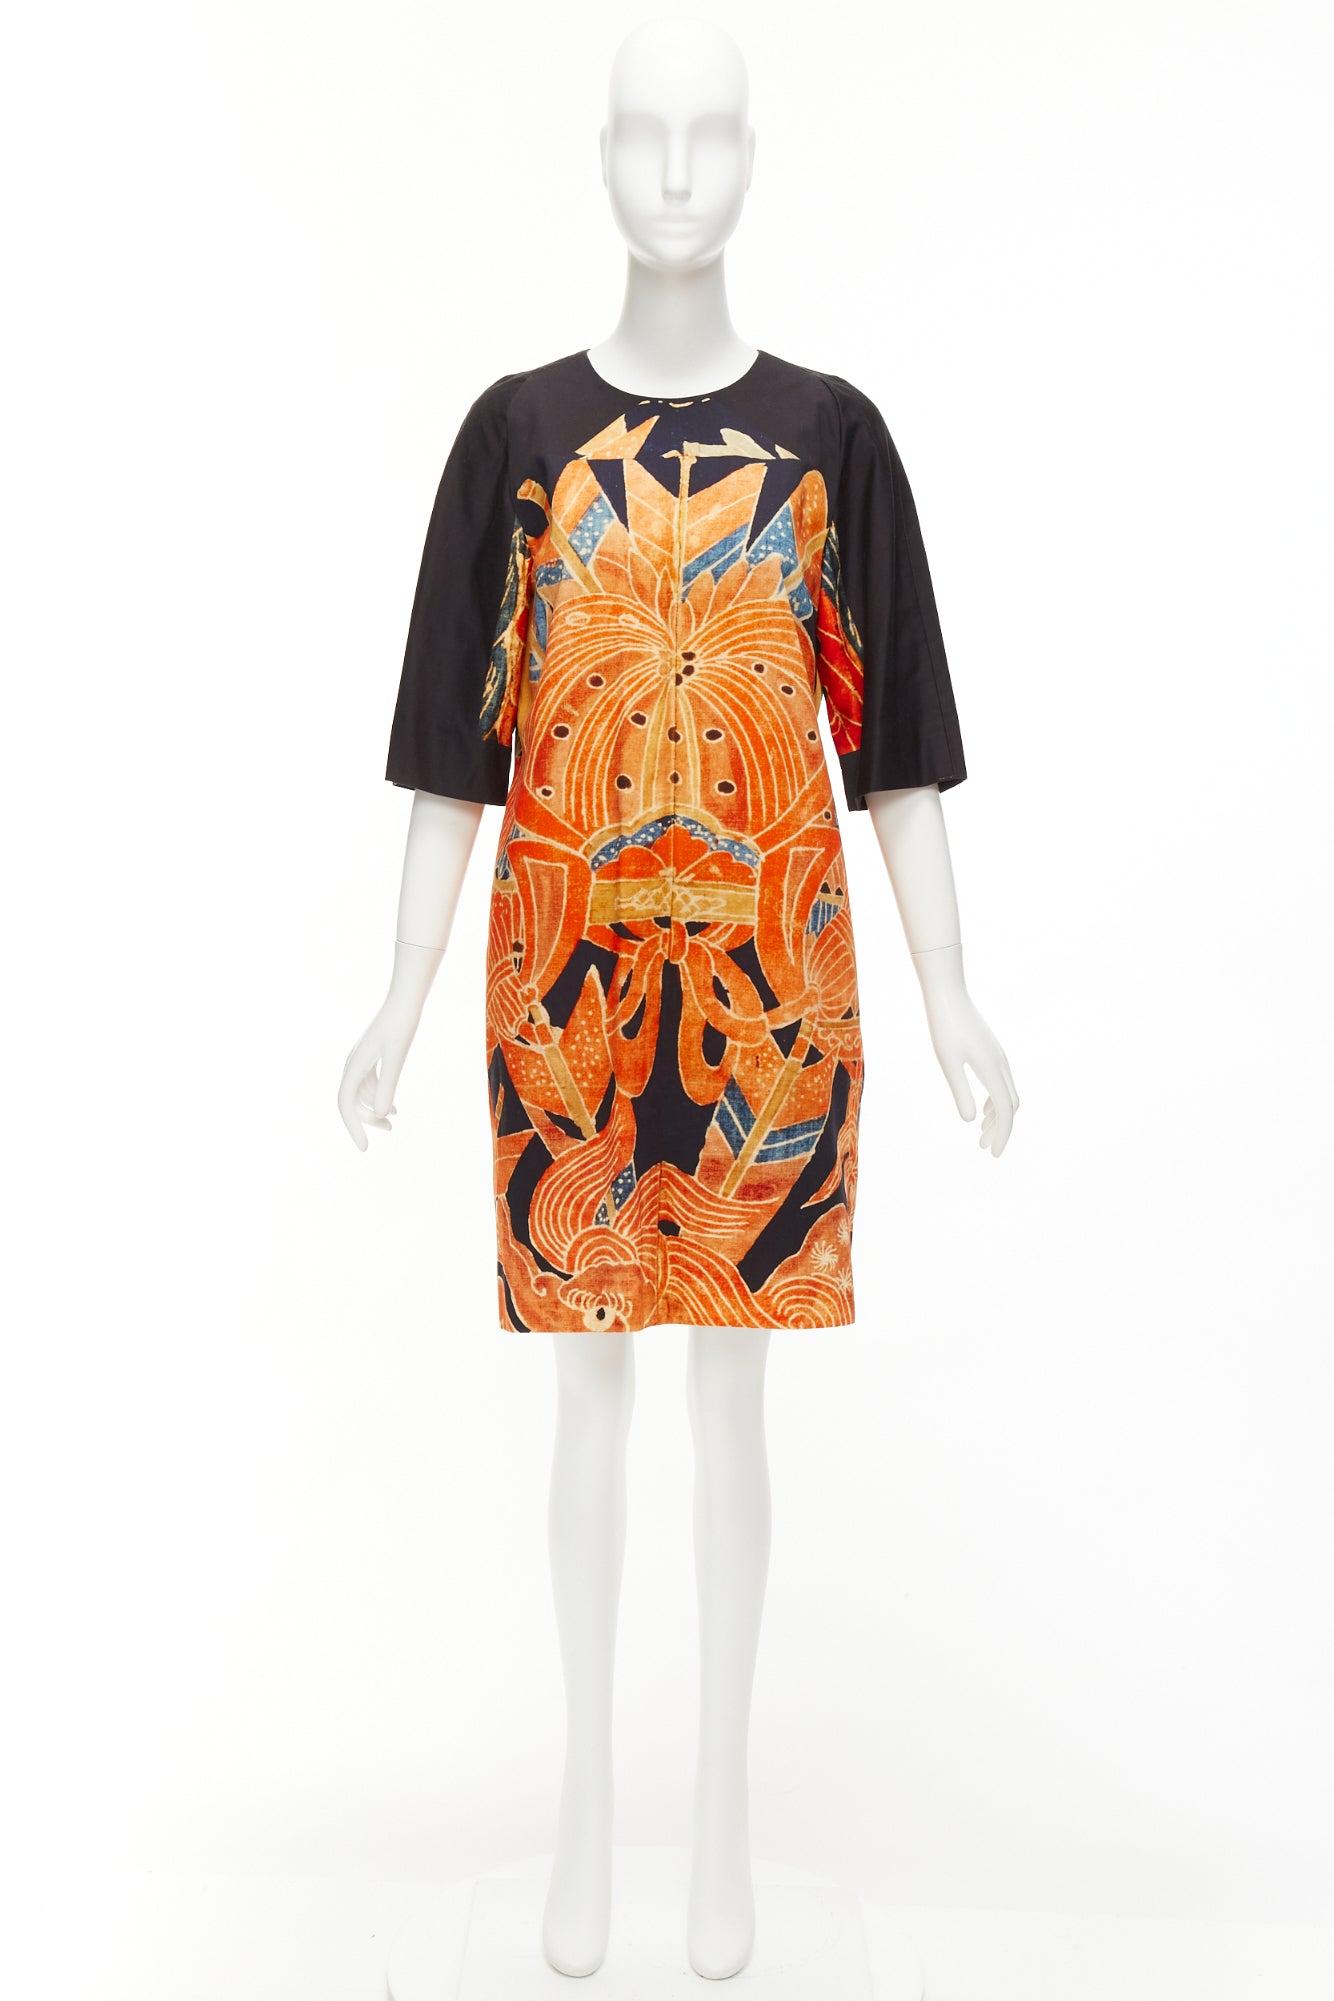 DRIES VAN NOTEN orange black cotton abstract ethnic print shift dress FR40 L For Sale 5